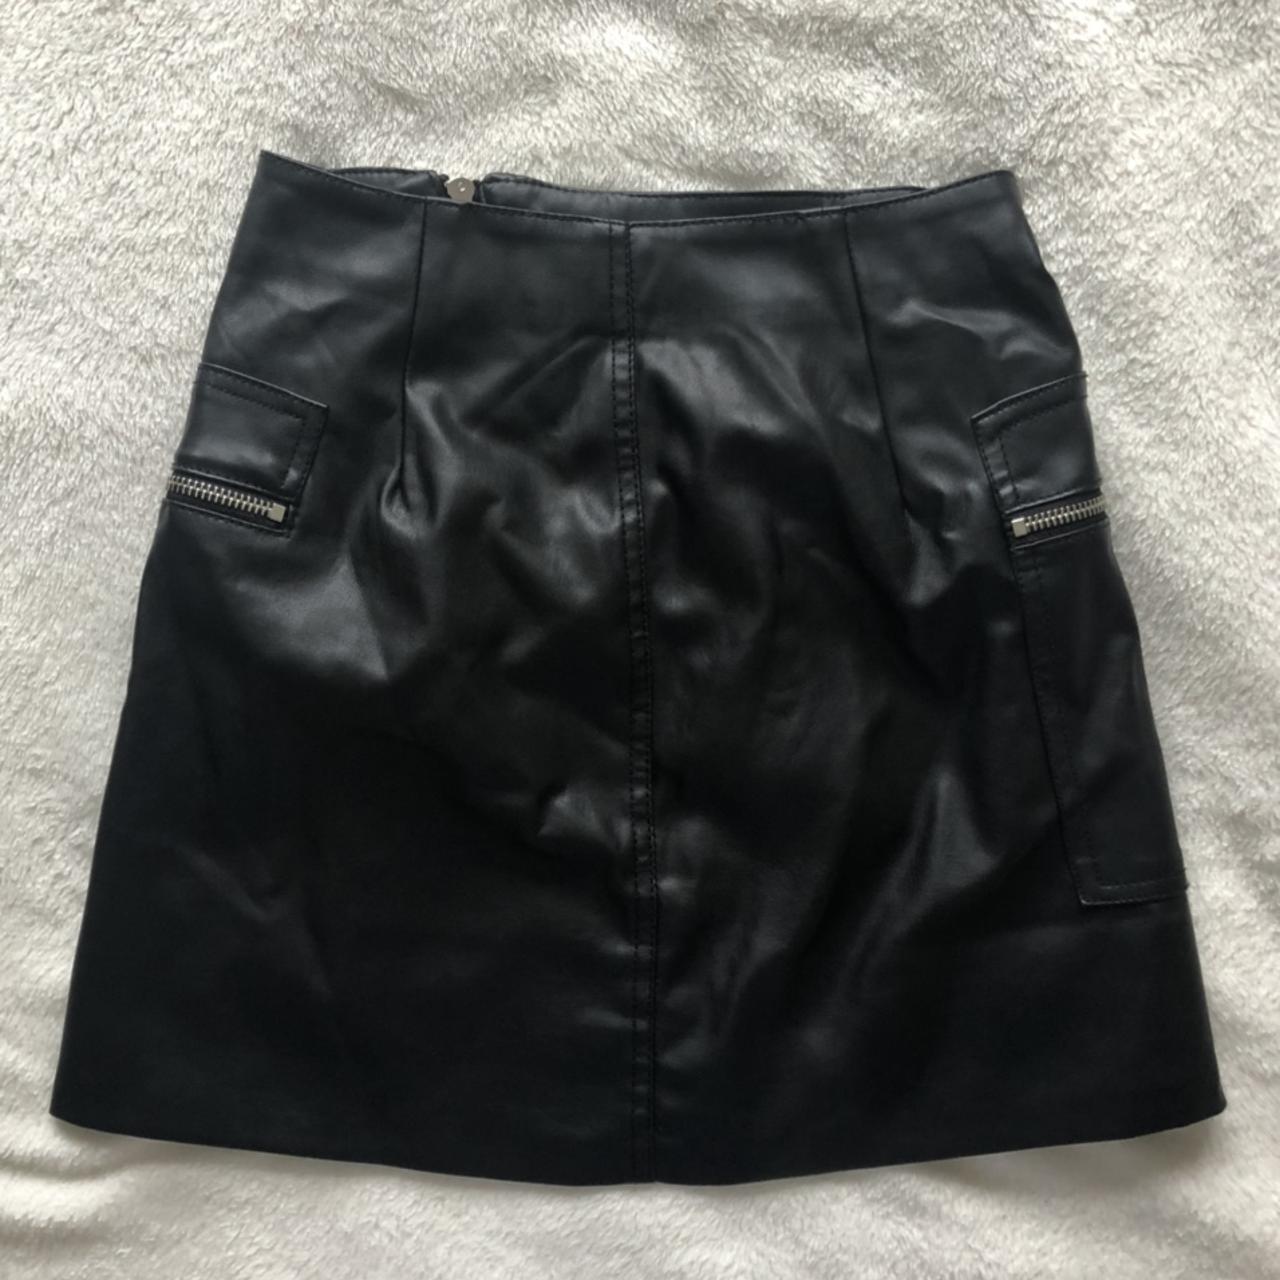 Bershka faux leather mini skirt super cute mini... - Depop